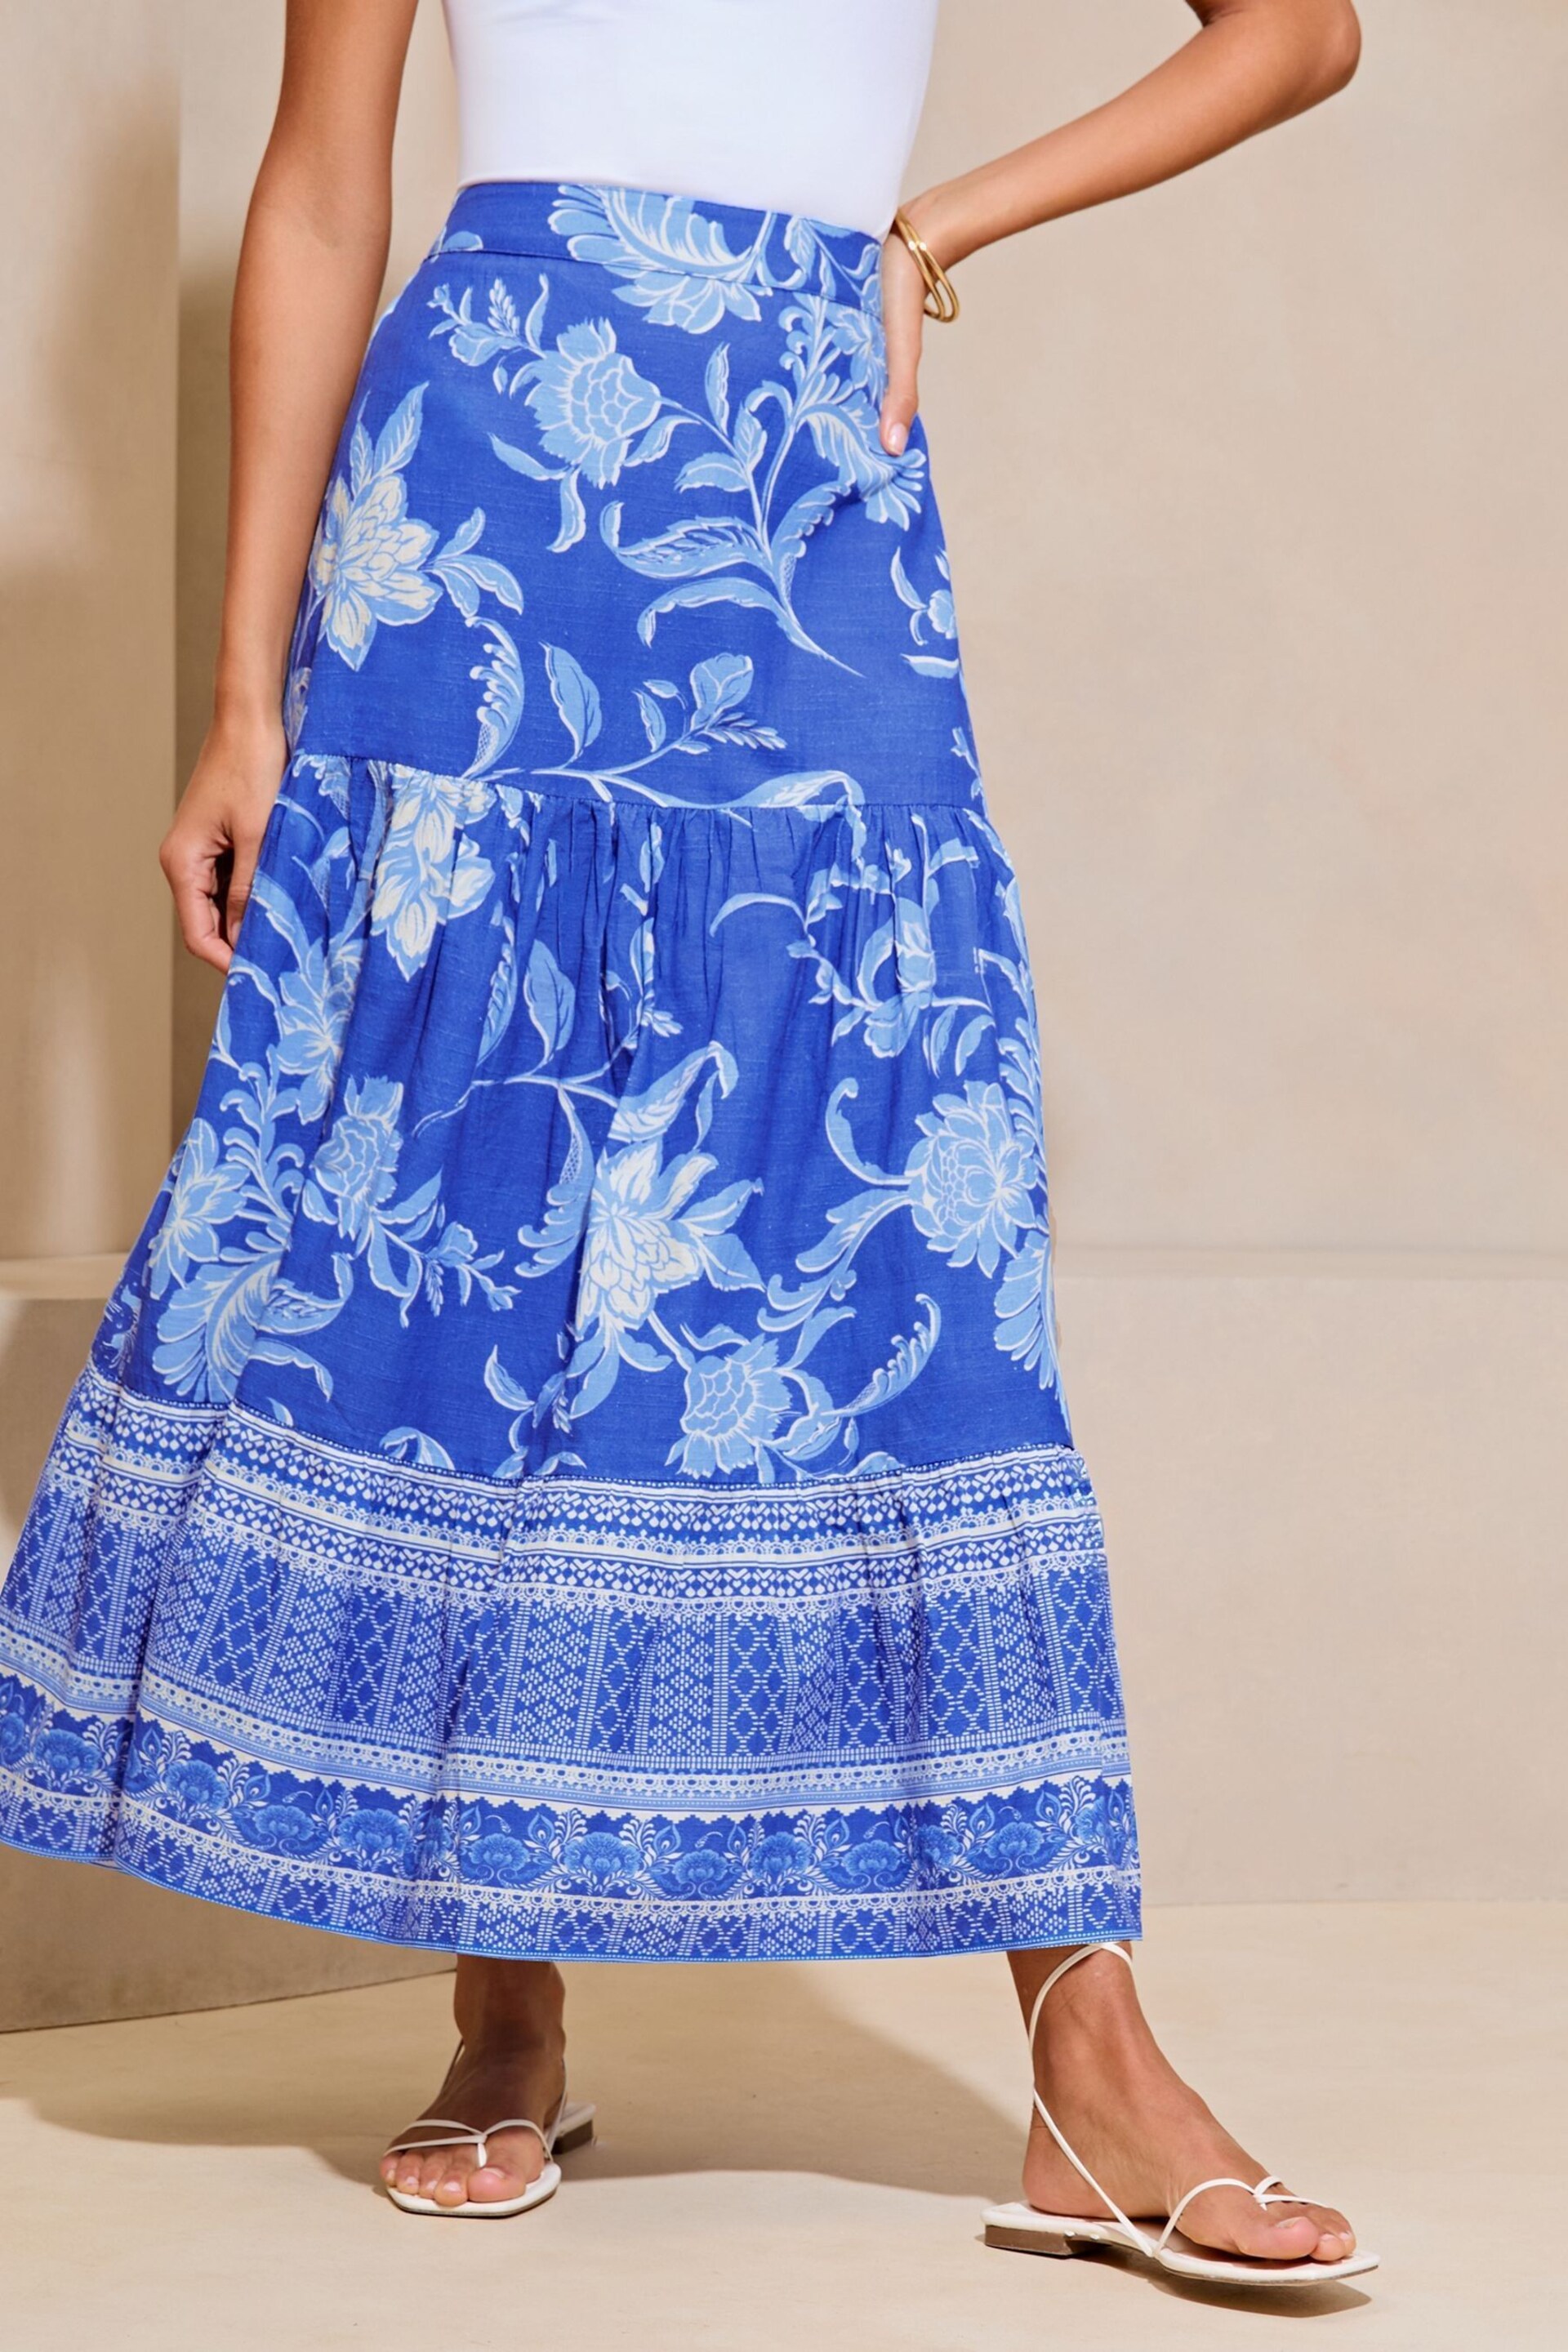 Lipsy Blue Tiered Printed Midi Skirt - Image 1 of 4